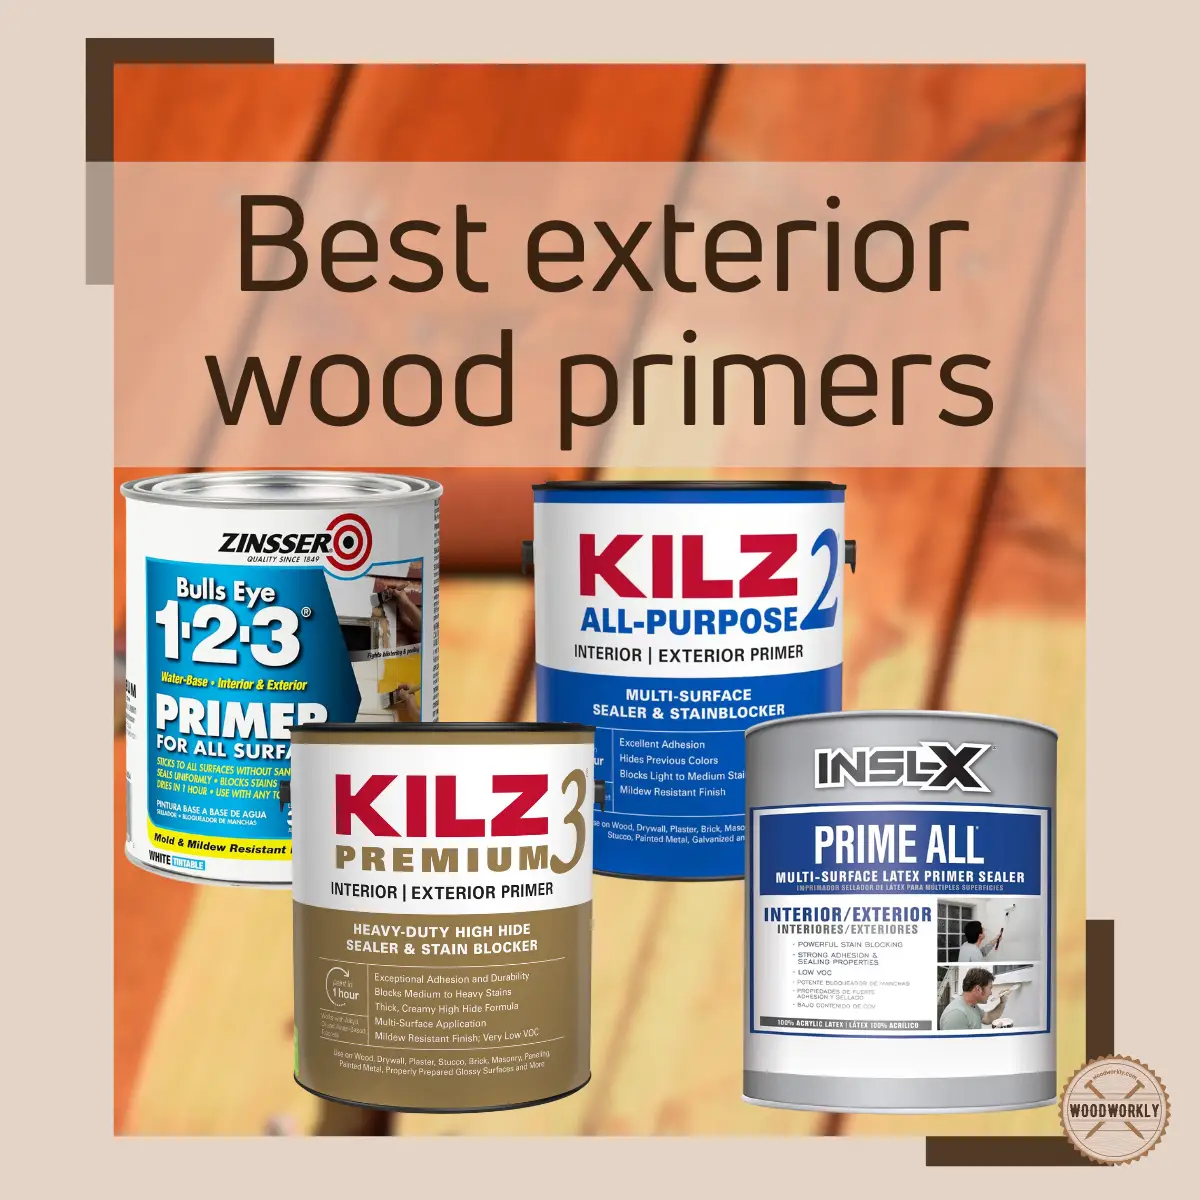 Best exterior wood primers